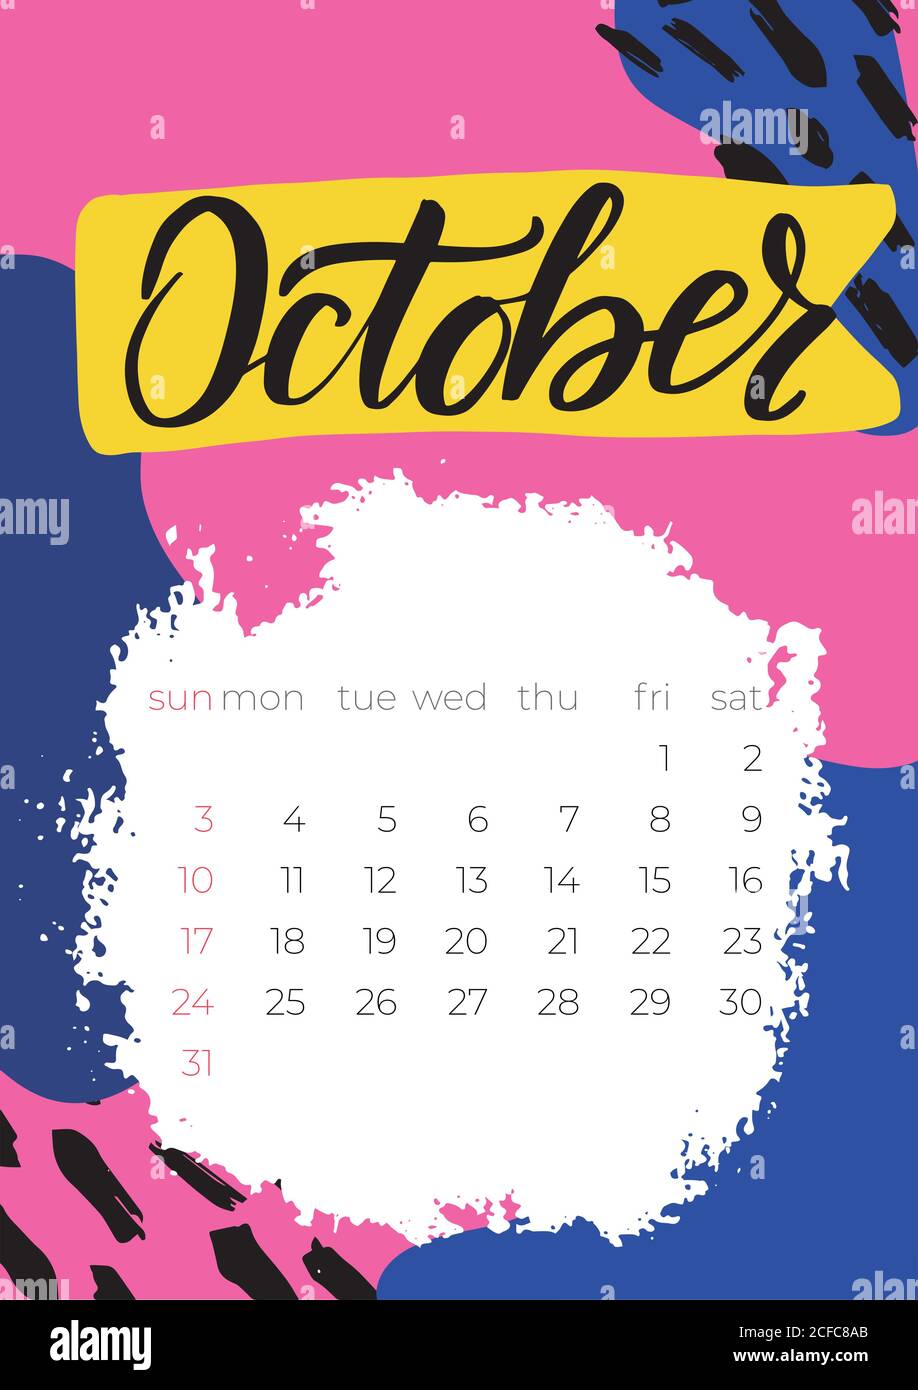 october-2021-calendar-mon-to-fri-free-resume-templates